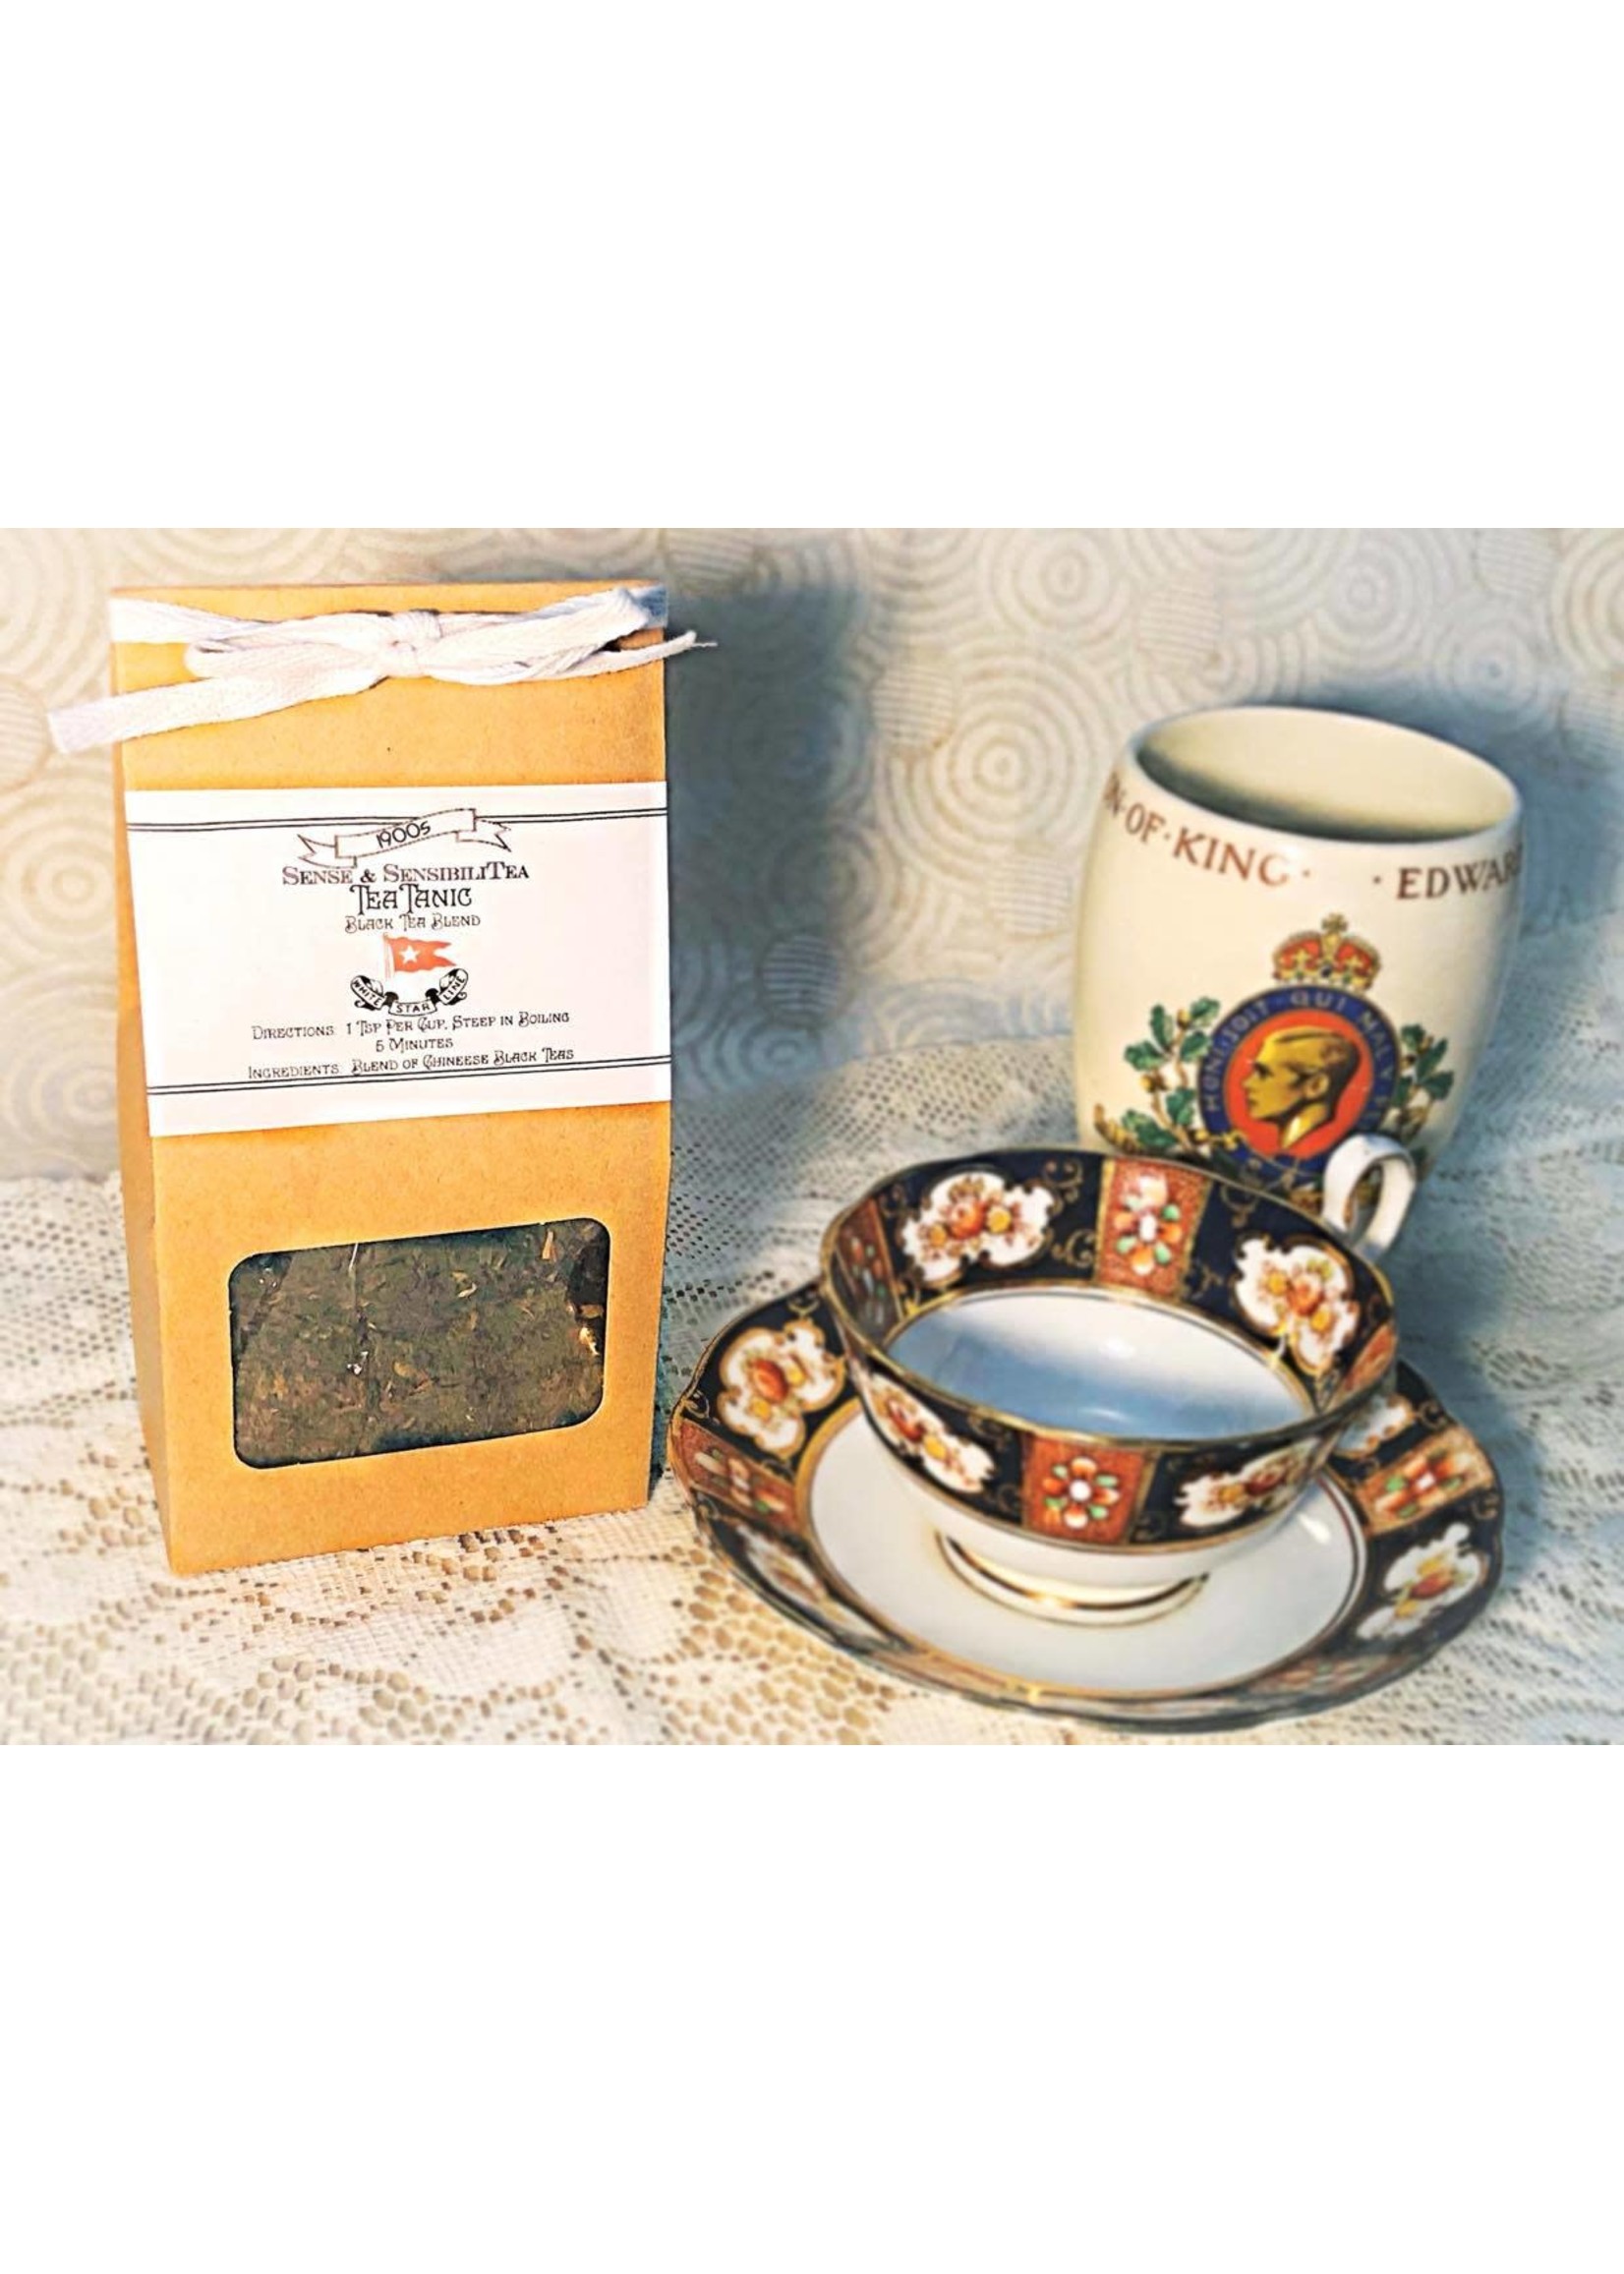 Sense and SensibiliTea 100g TeaTanic (Black Tea) – 1900s